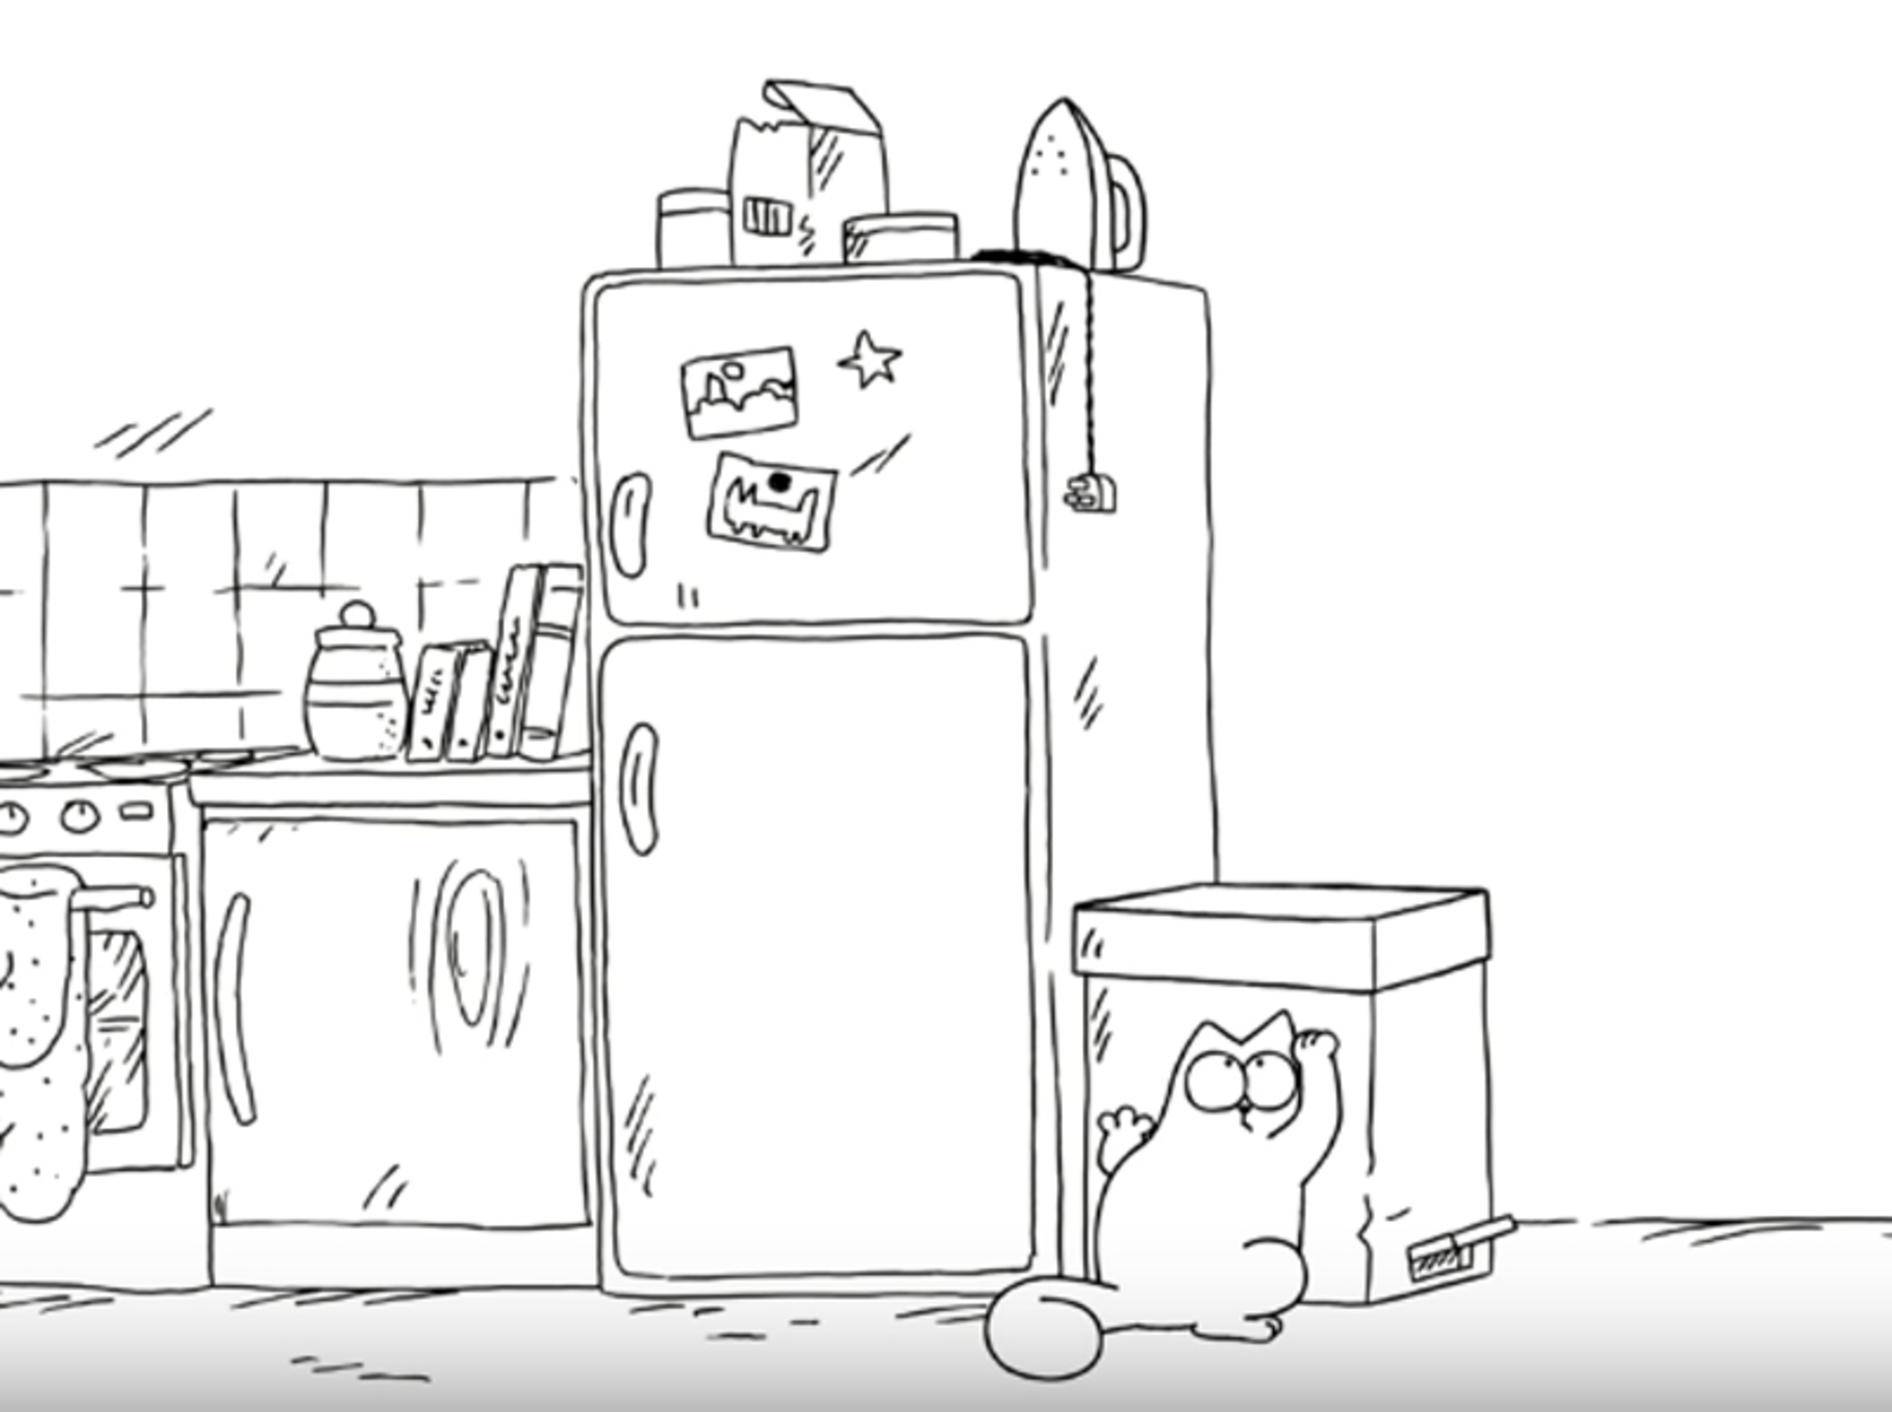 "Das willst du wegschmeißen?": Simon's Cat plündert Mülleimer – YouTube / Simon's Cat